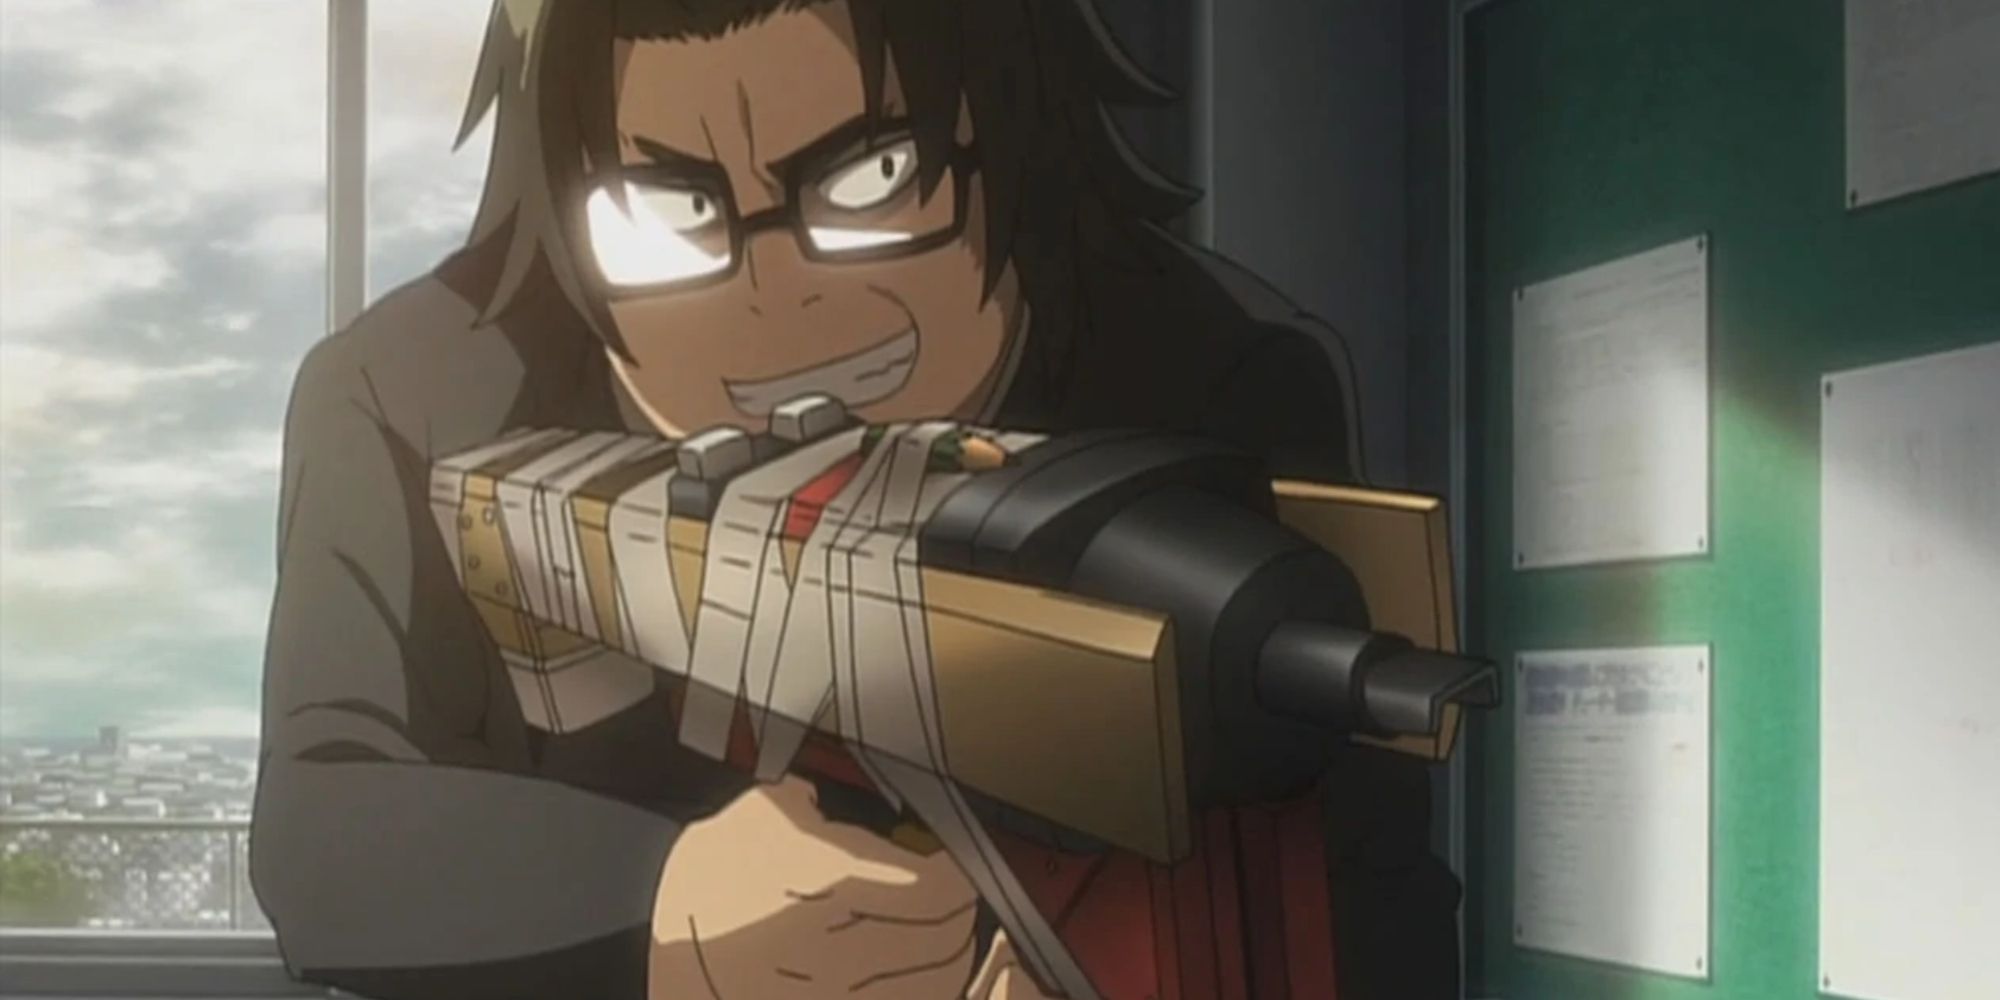 kouta holding his handmade gun